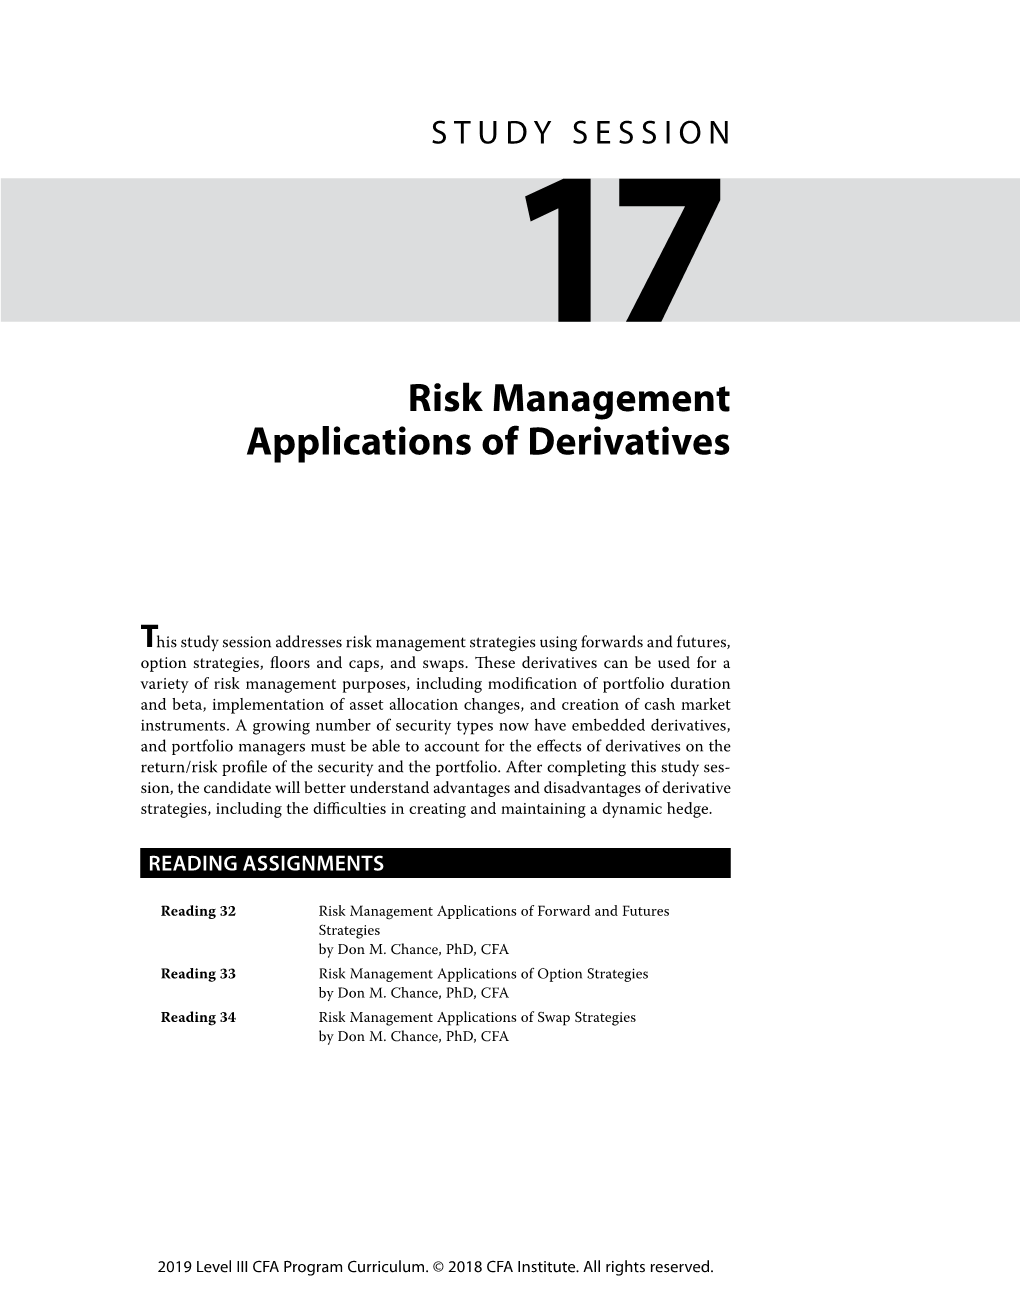 Risk Management Applications of Derivatives